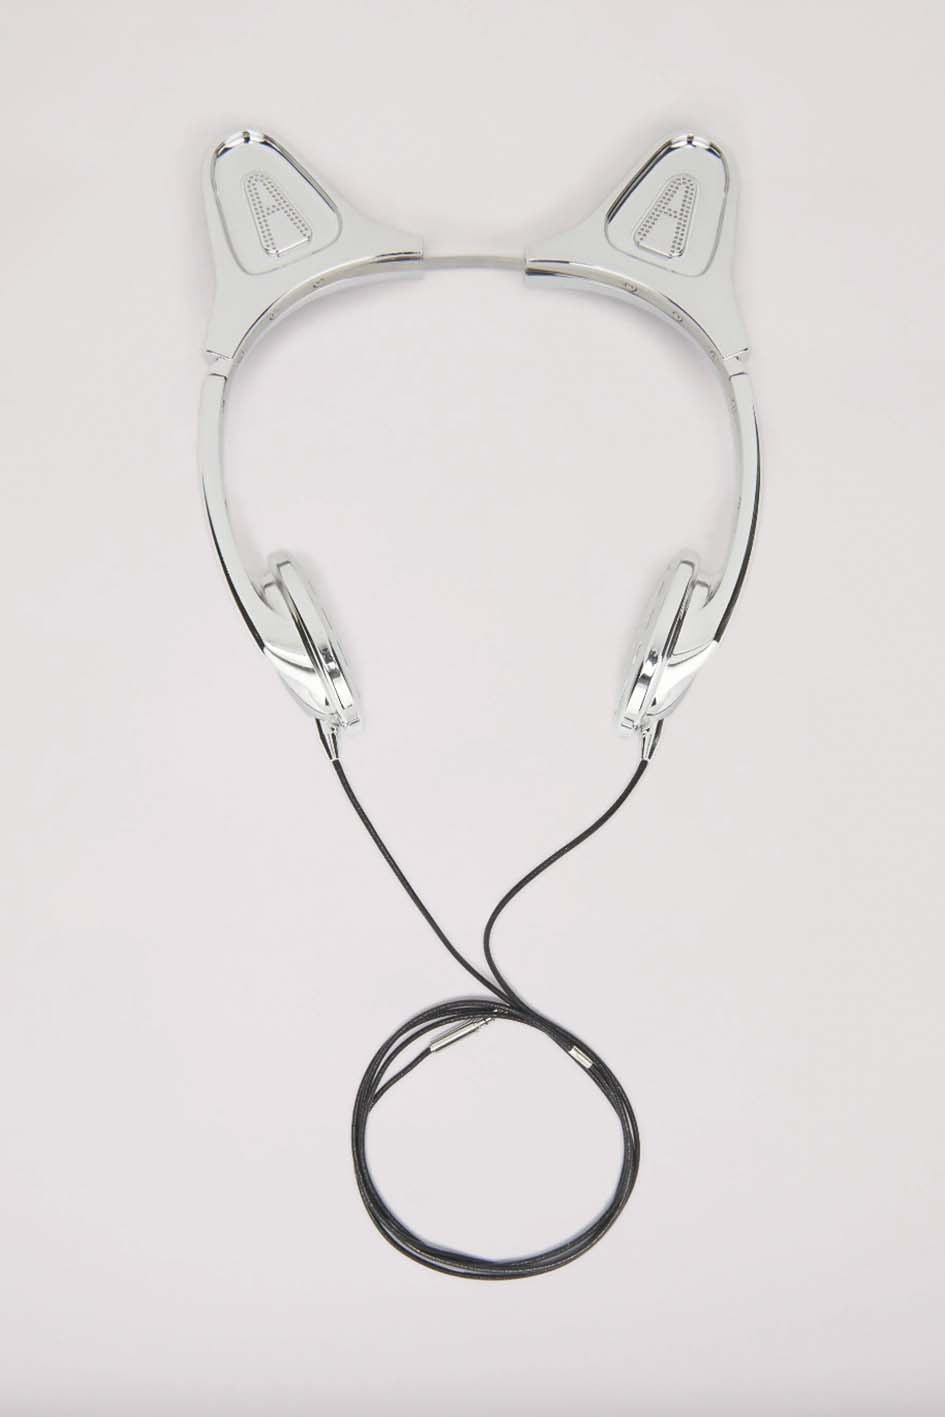 AMBUSH 推出「偽」 CD player、貓耳耳機配飾組